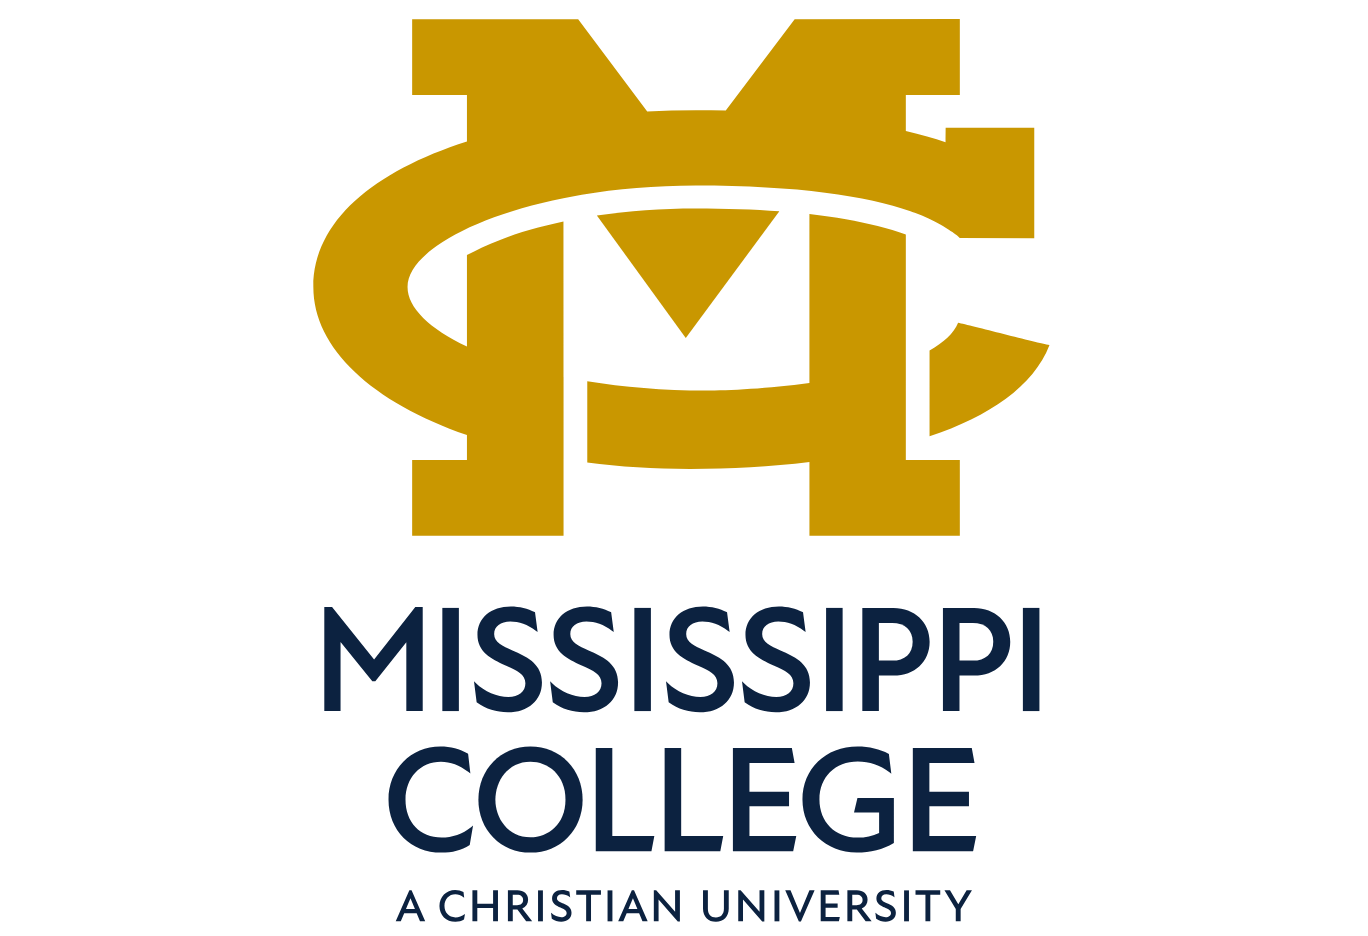 Mississippi college